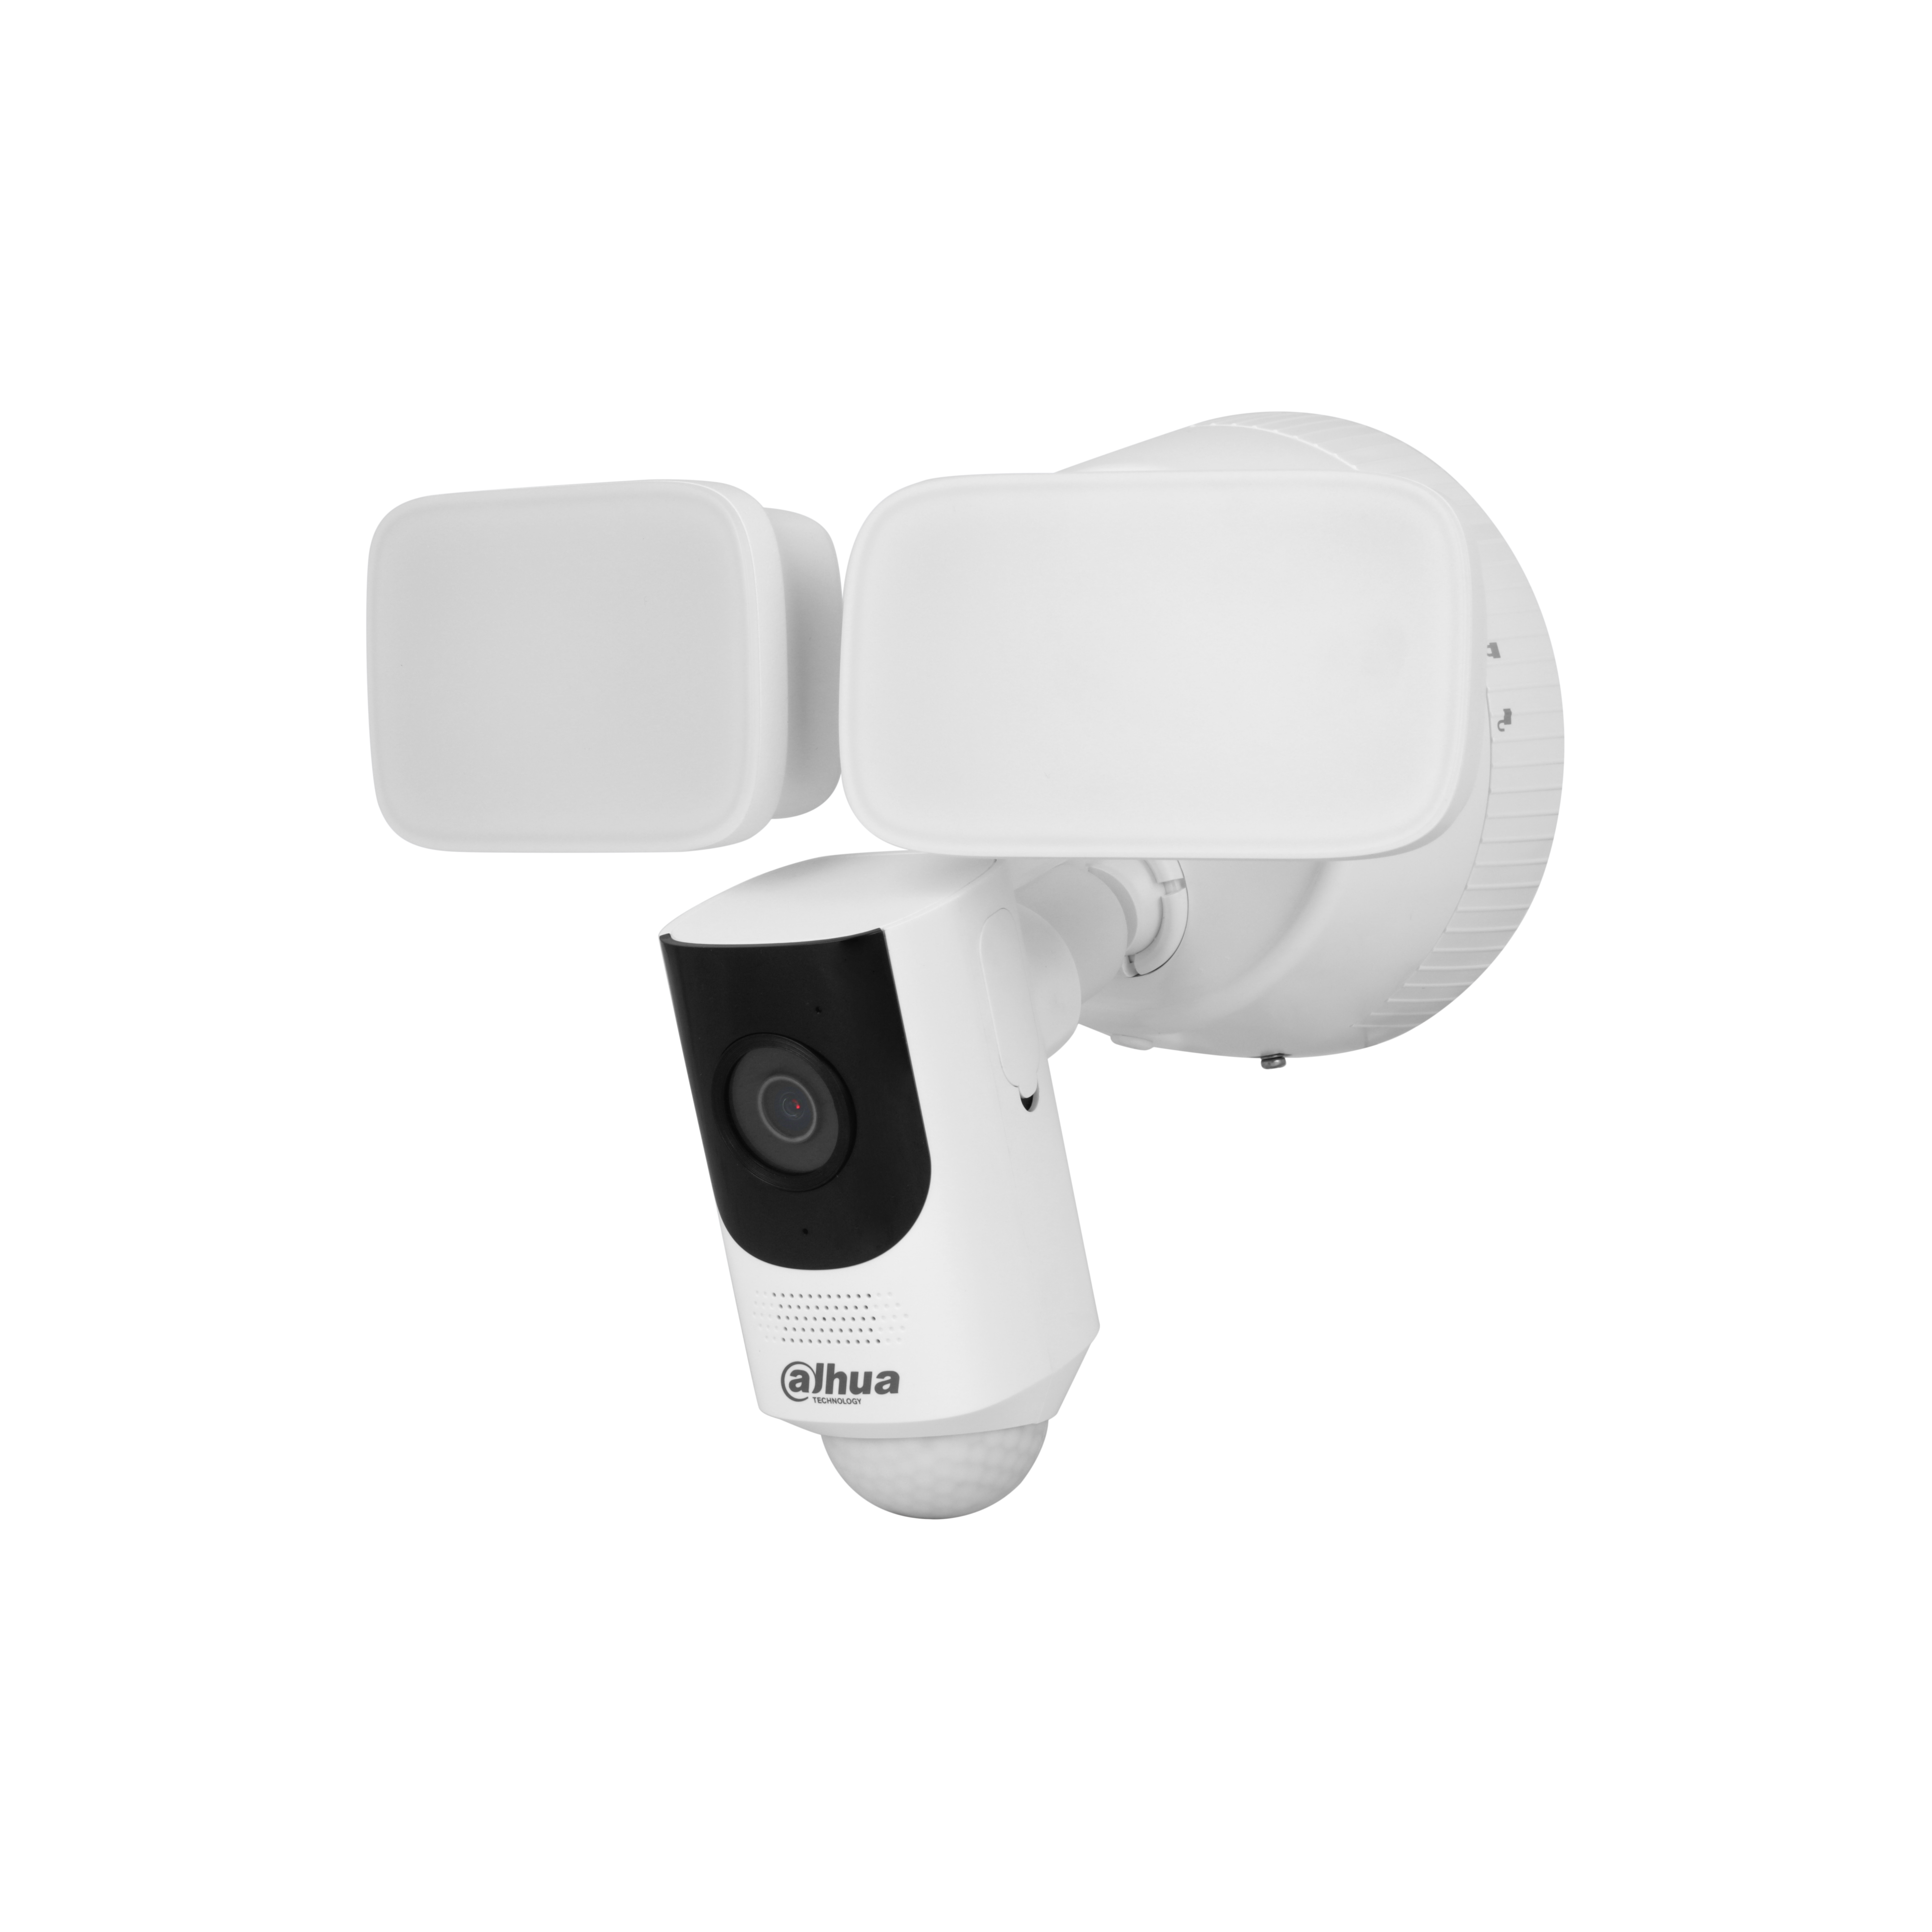 DAHUA DH-IPC-WL46AP wifi series ip camera white 4mp h.264/4+/5/5+ pir digital wdr metal 2.8mm fixed lens CCTV